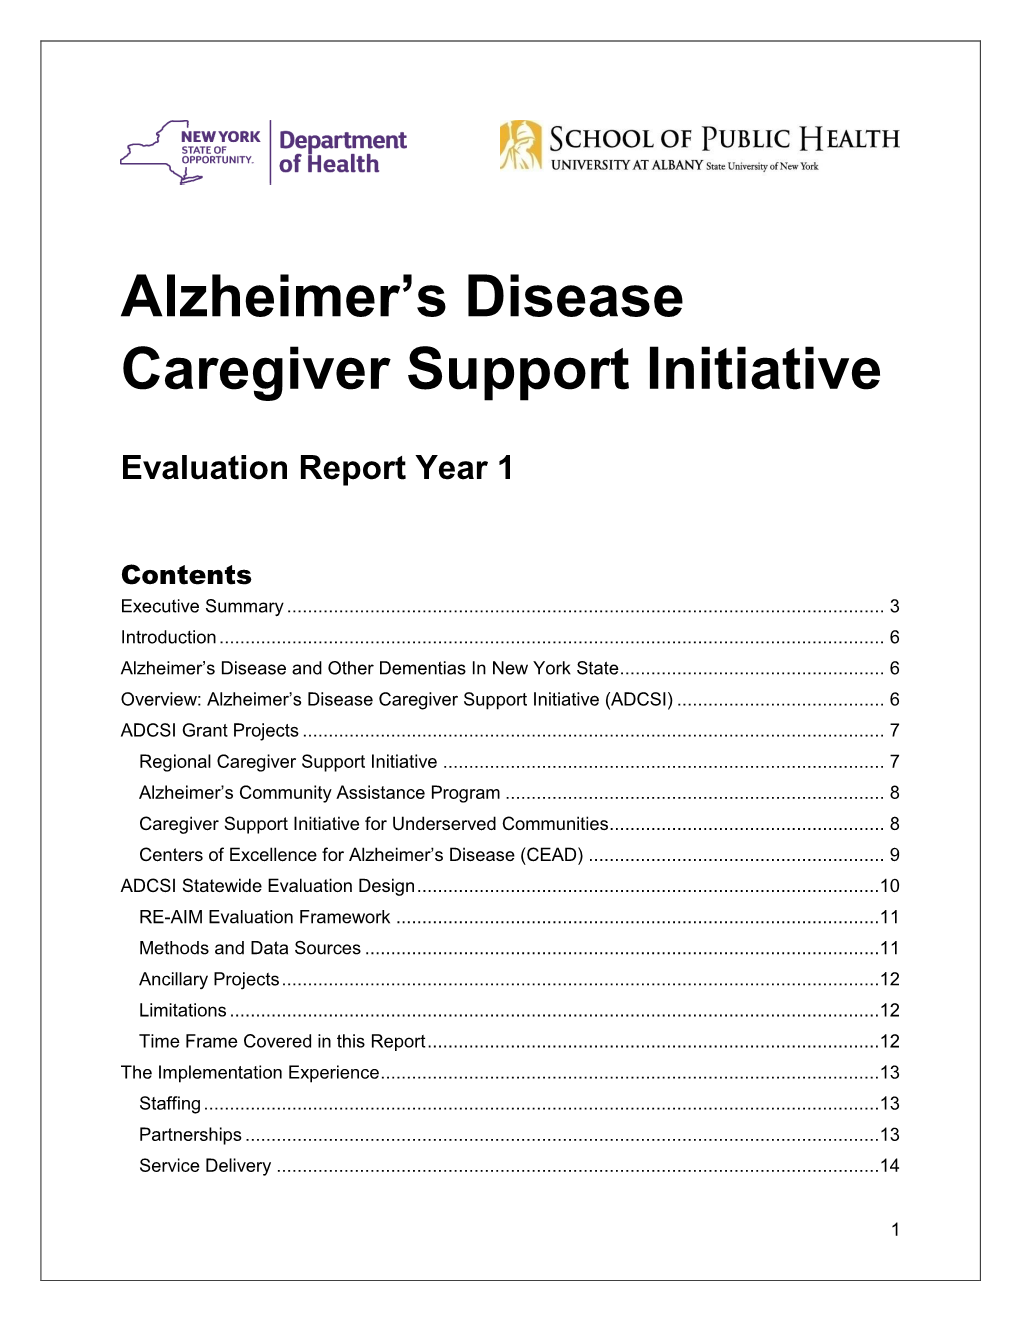 Alzheimer's Disease Caregiver Support Initiative